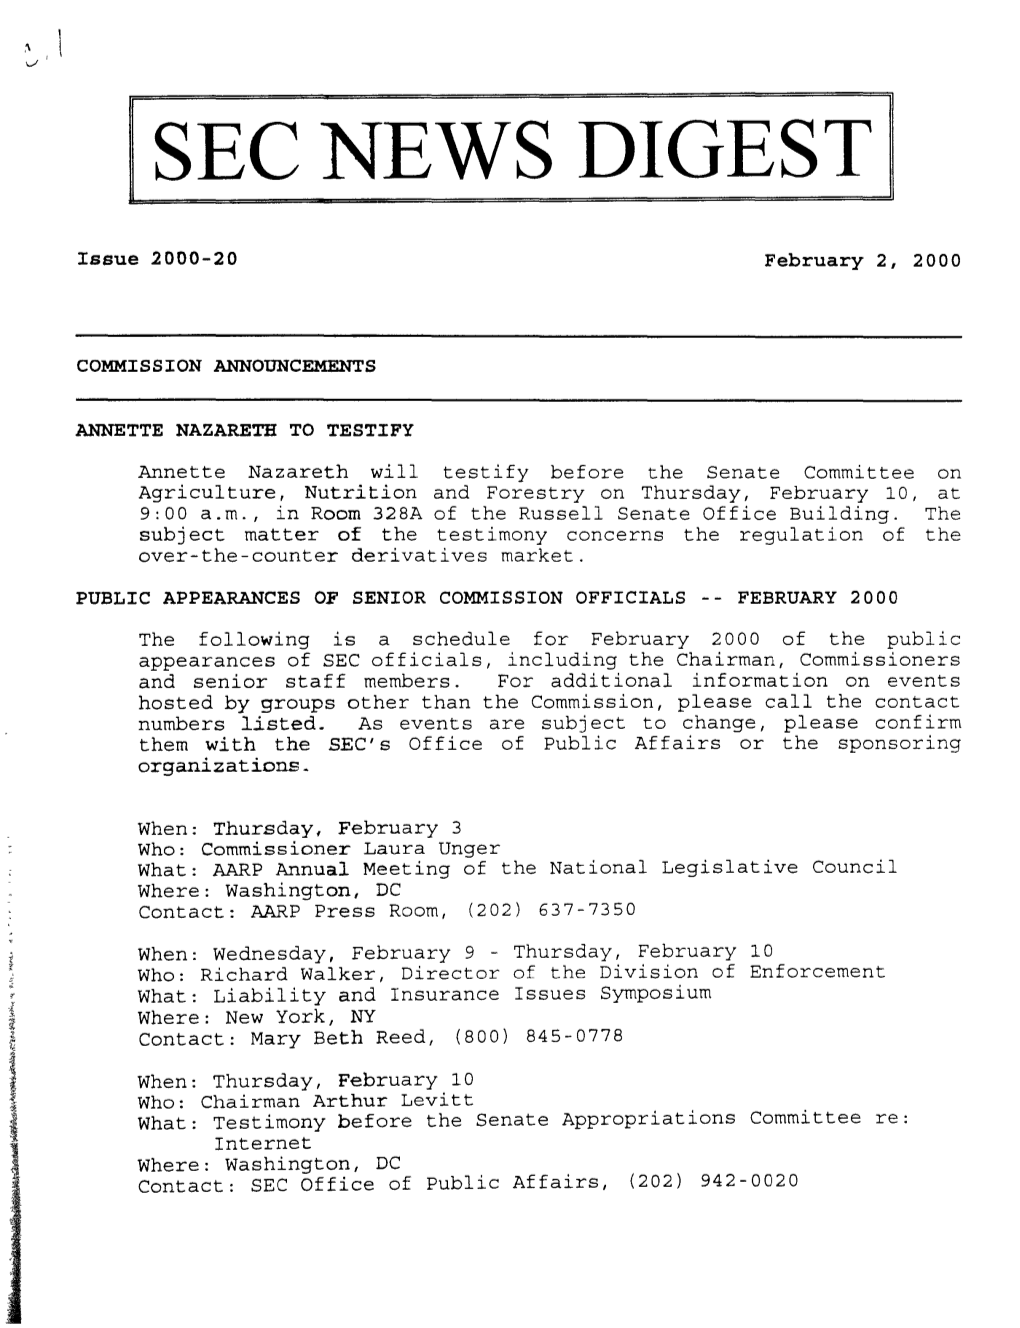 SEC News Digest, 02-02-2000